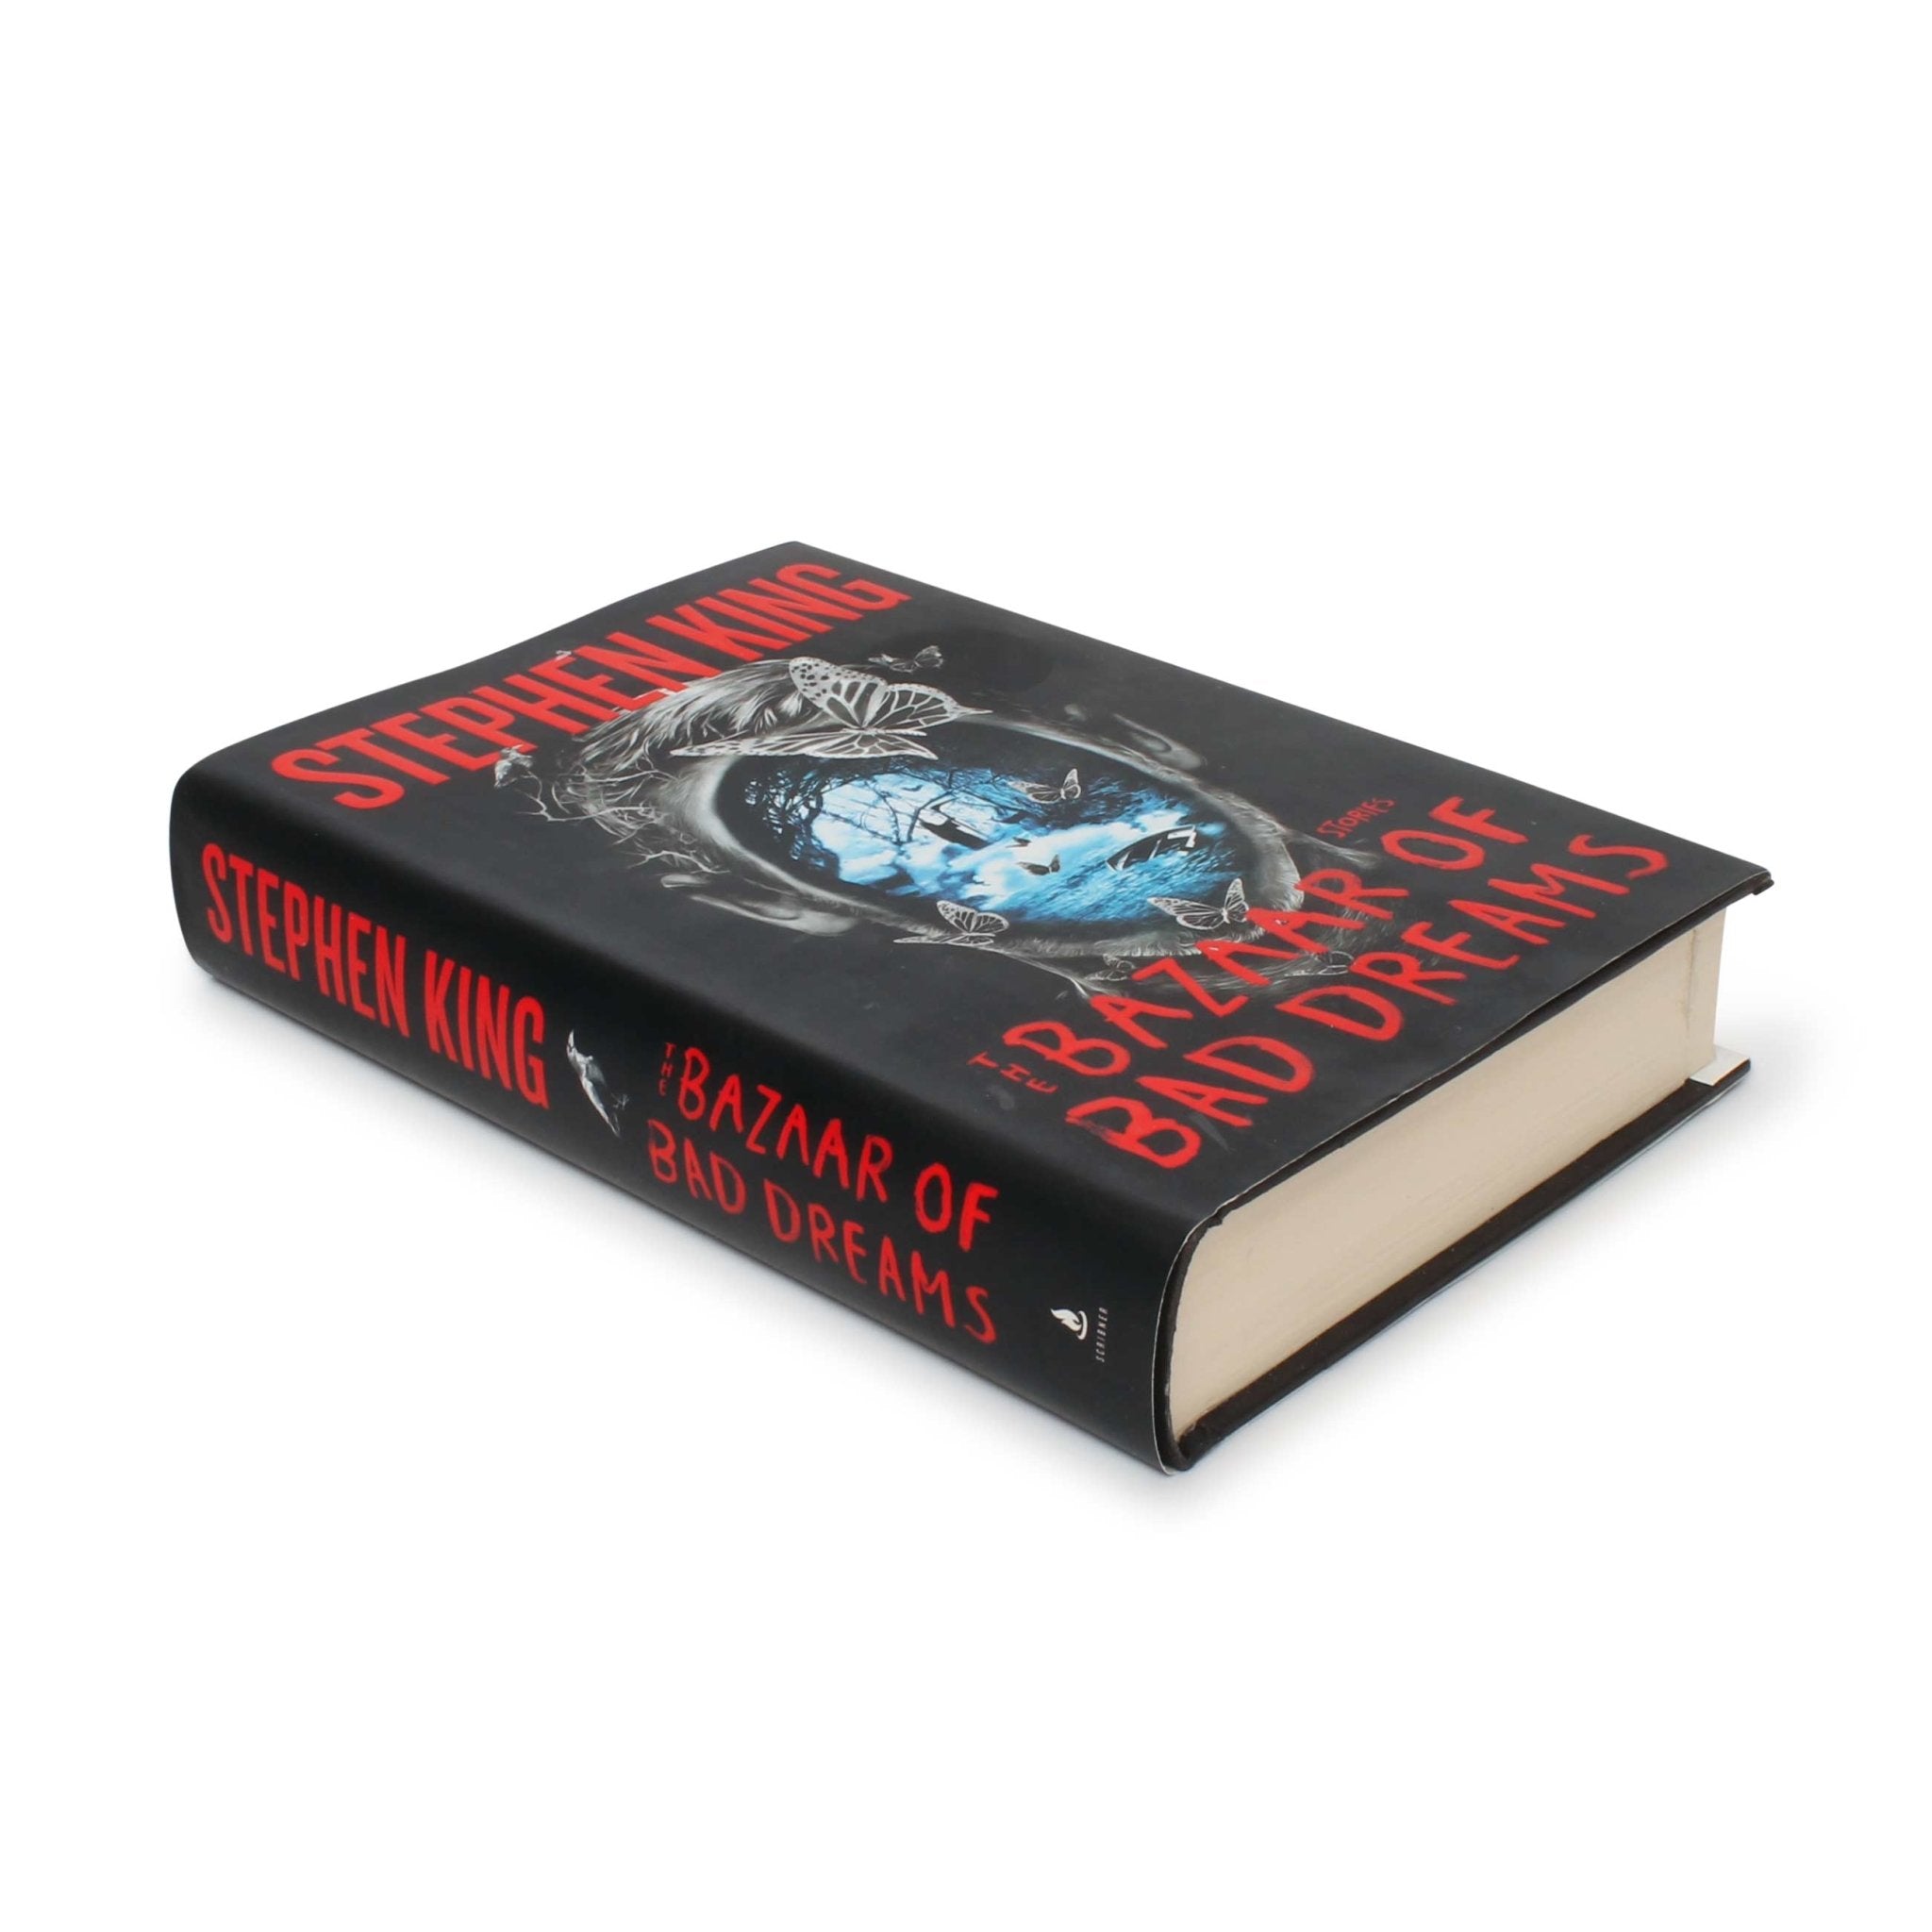 Bazaar of Bad Dreams by Stephen King - Secret Storage Book Safe - Secret Storage Books